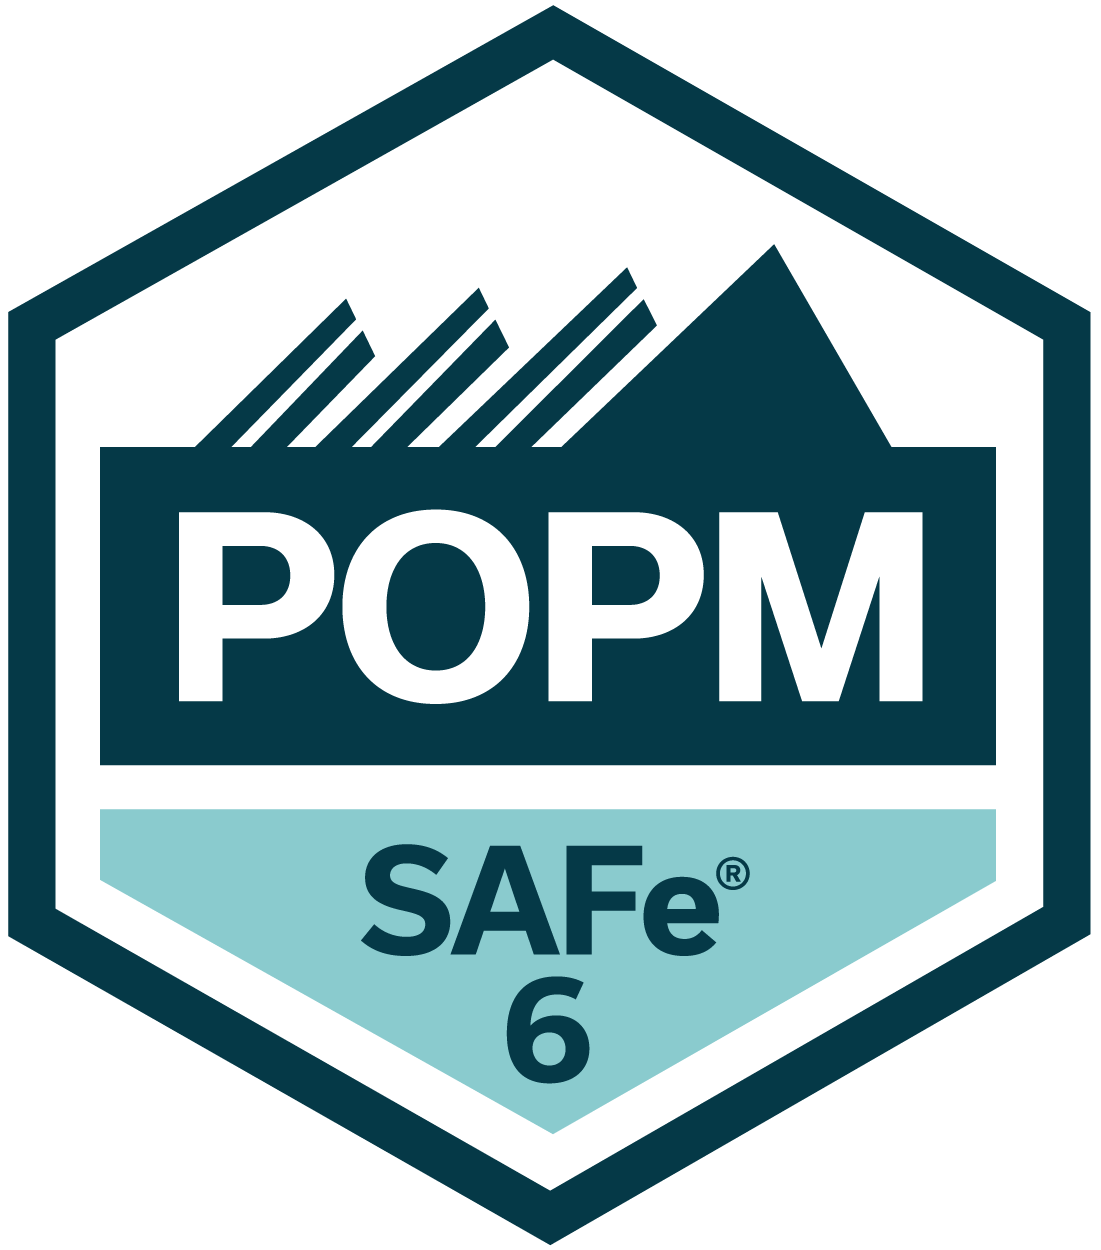 POPM SAFe 6